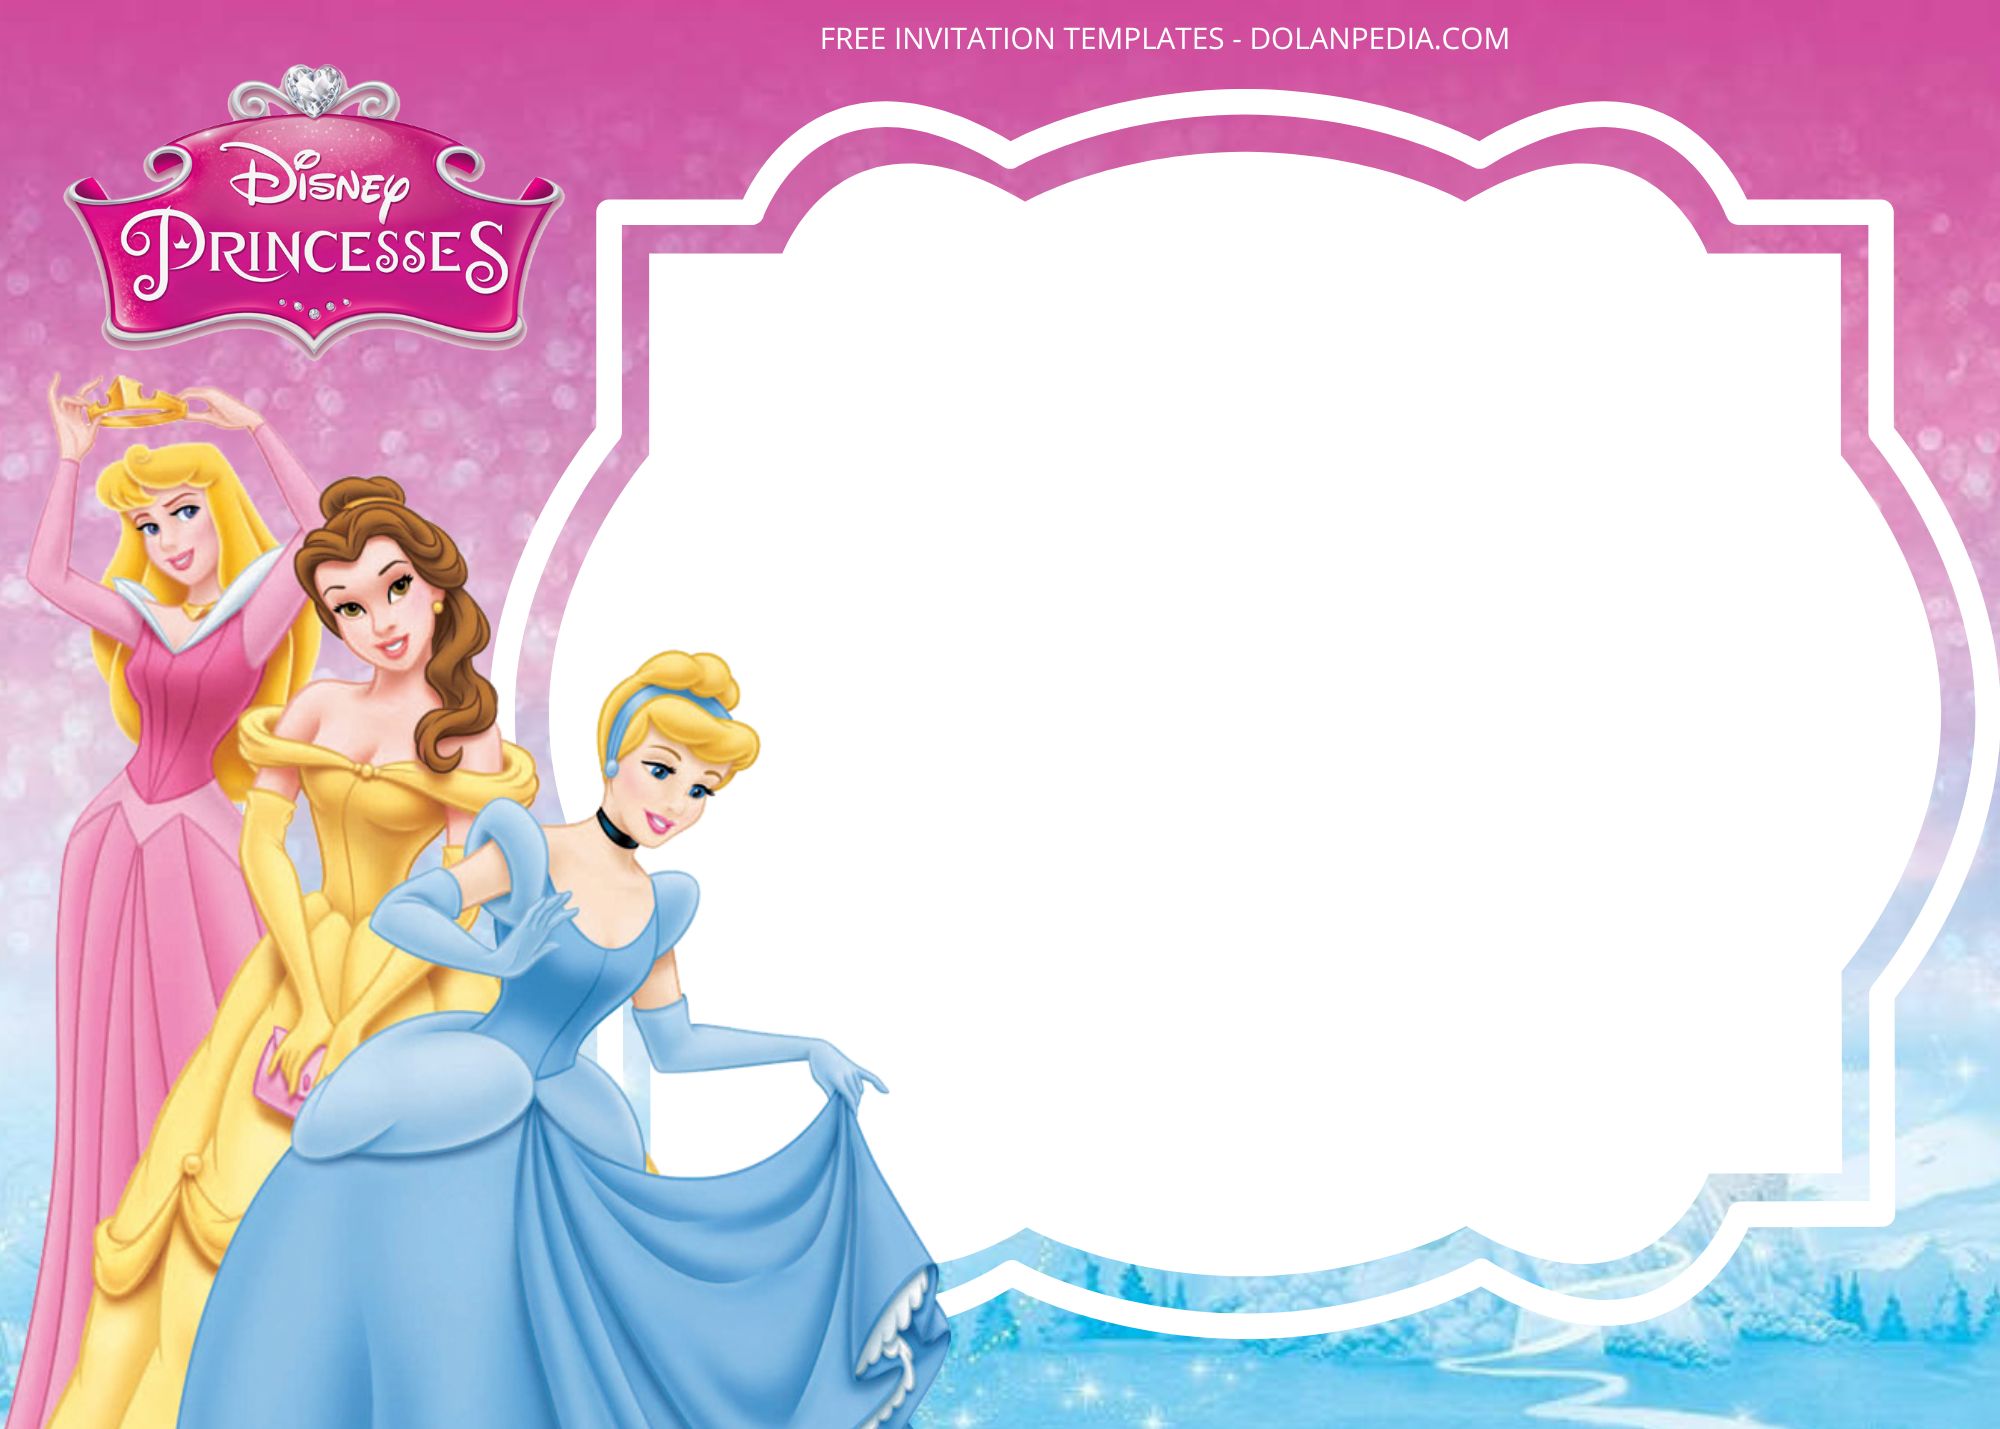 Blank Disney Princess Birthday Invitation Templates Five